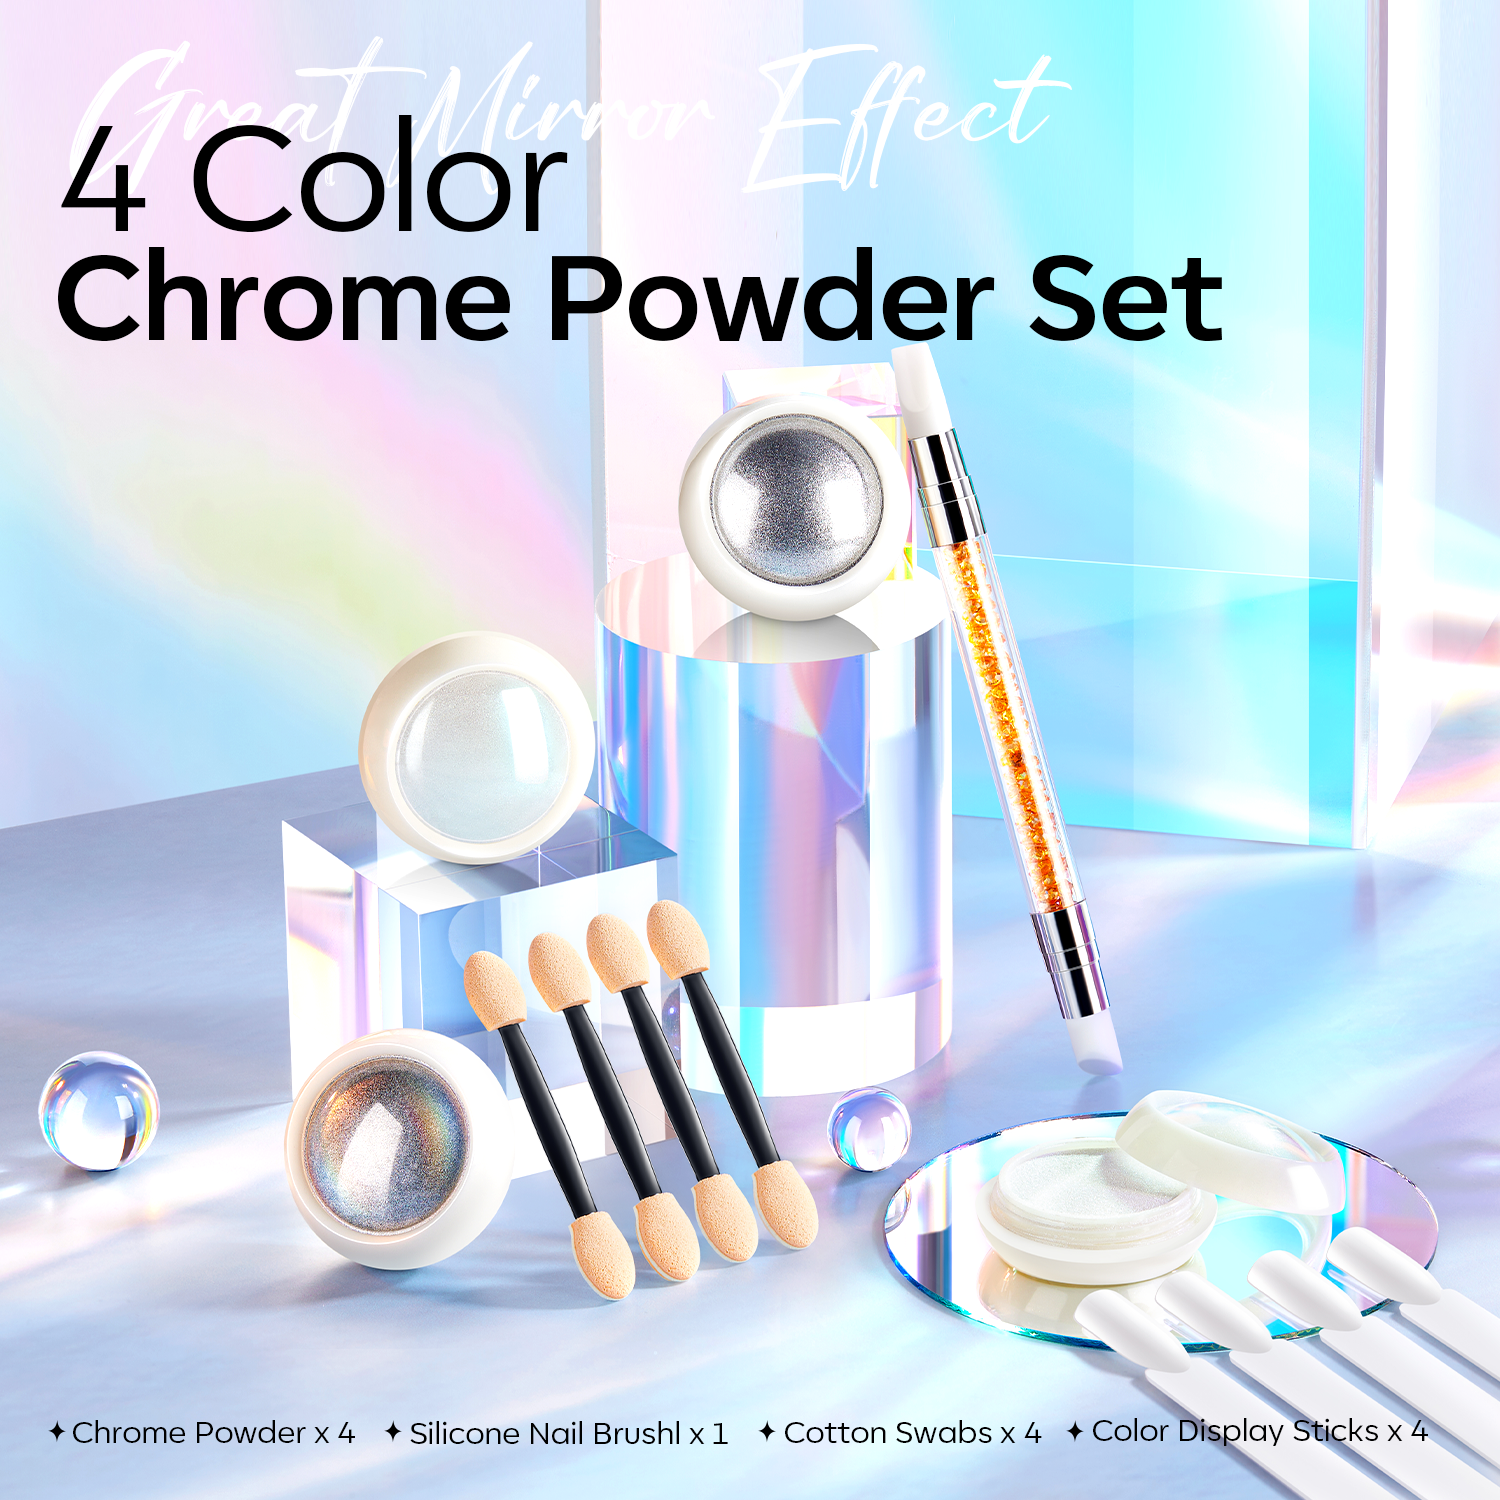 4 Colors Chrome Powder Set - Galactic Halo【US/EU/UK ONLY】